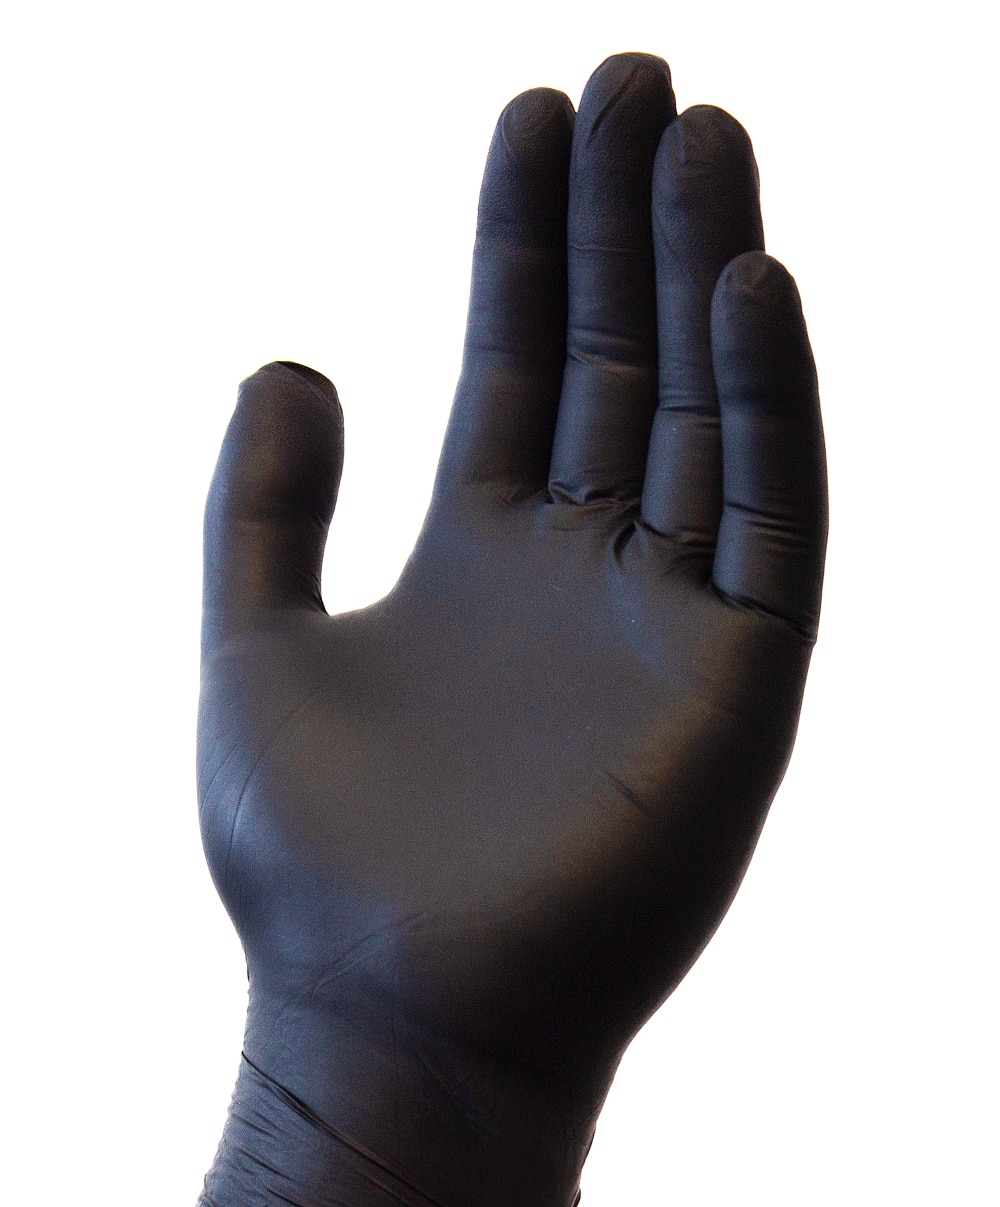 GNEP-XL-K N4434 4.3Mil Nitrile 
Medical Grade Powder Free 
Black Glove 100/Bx 10Bx/Cs